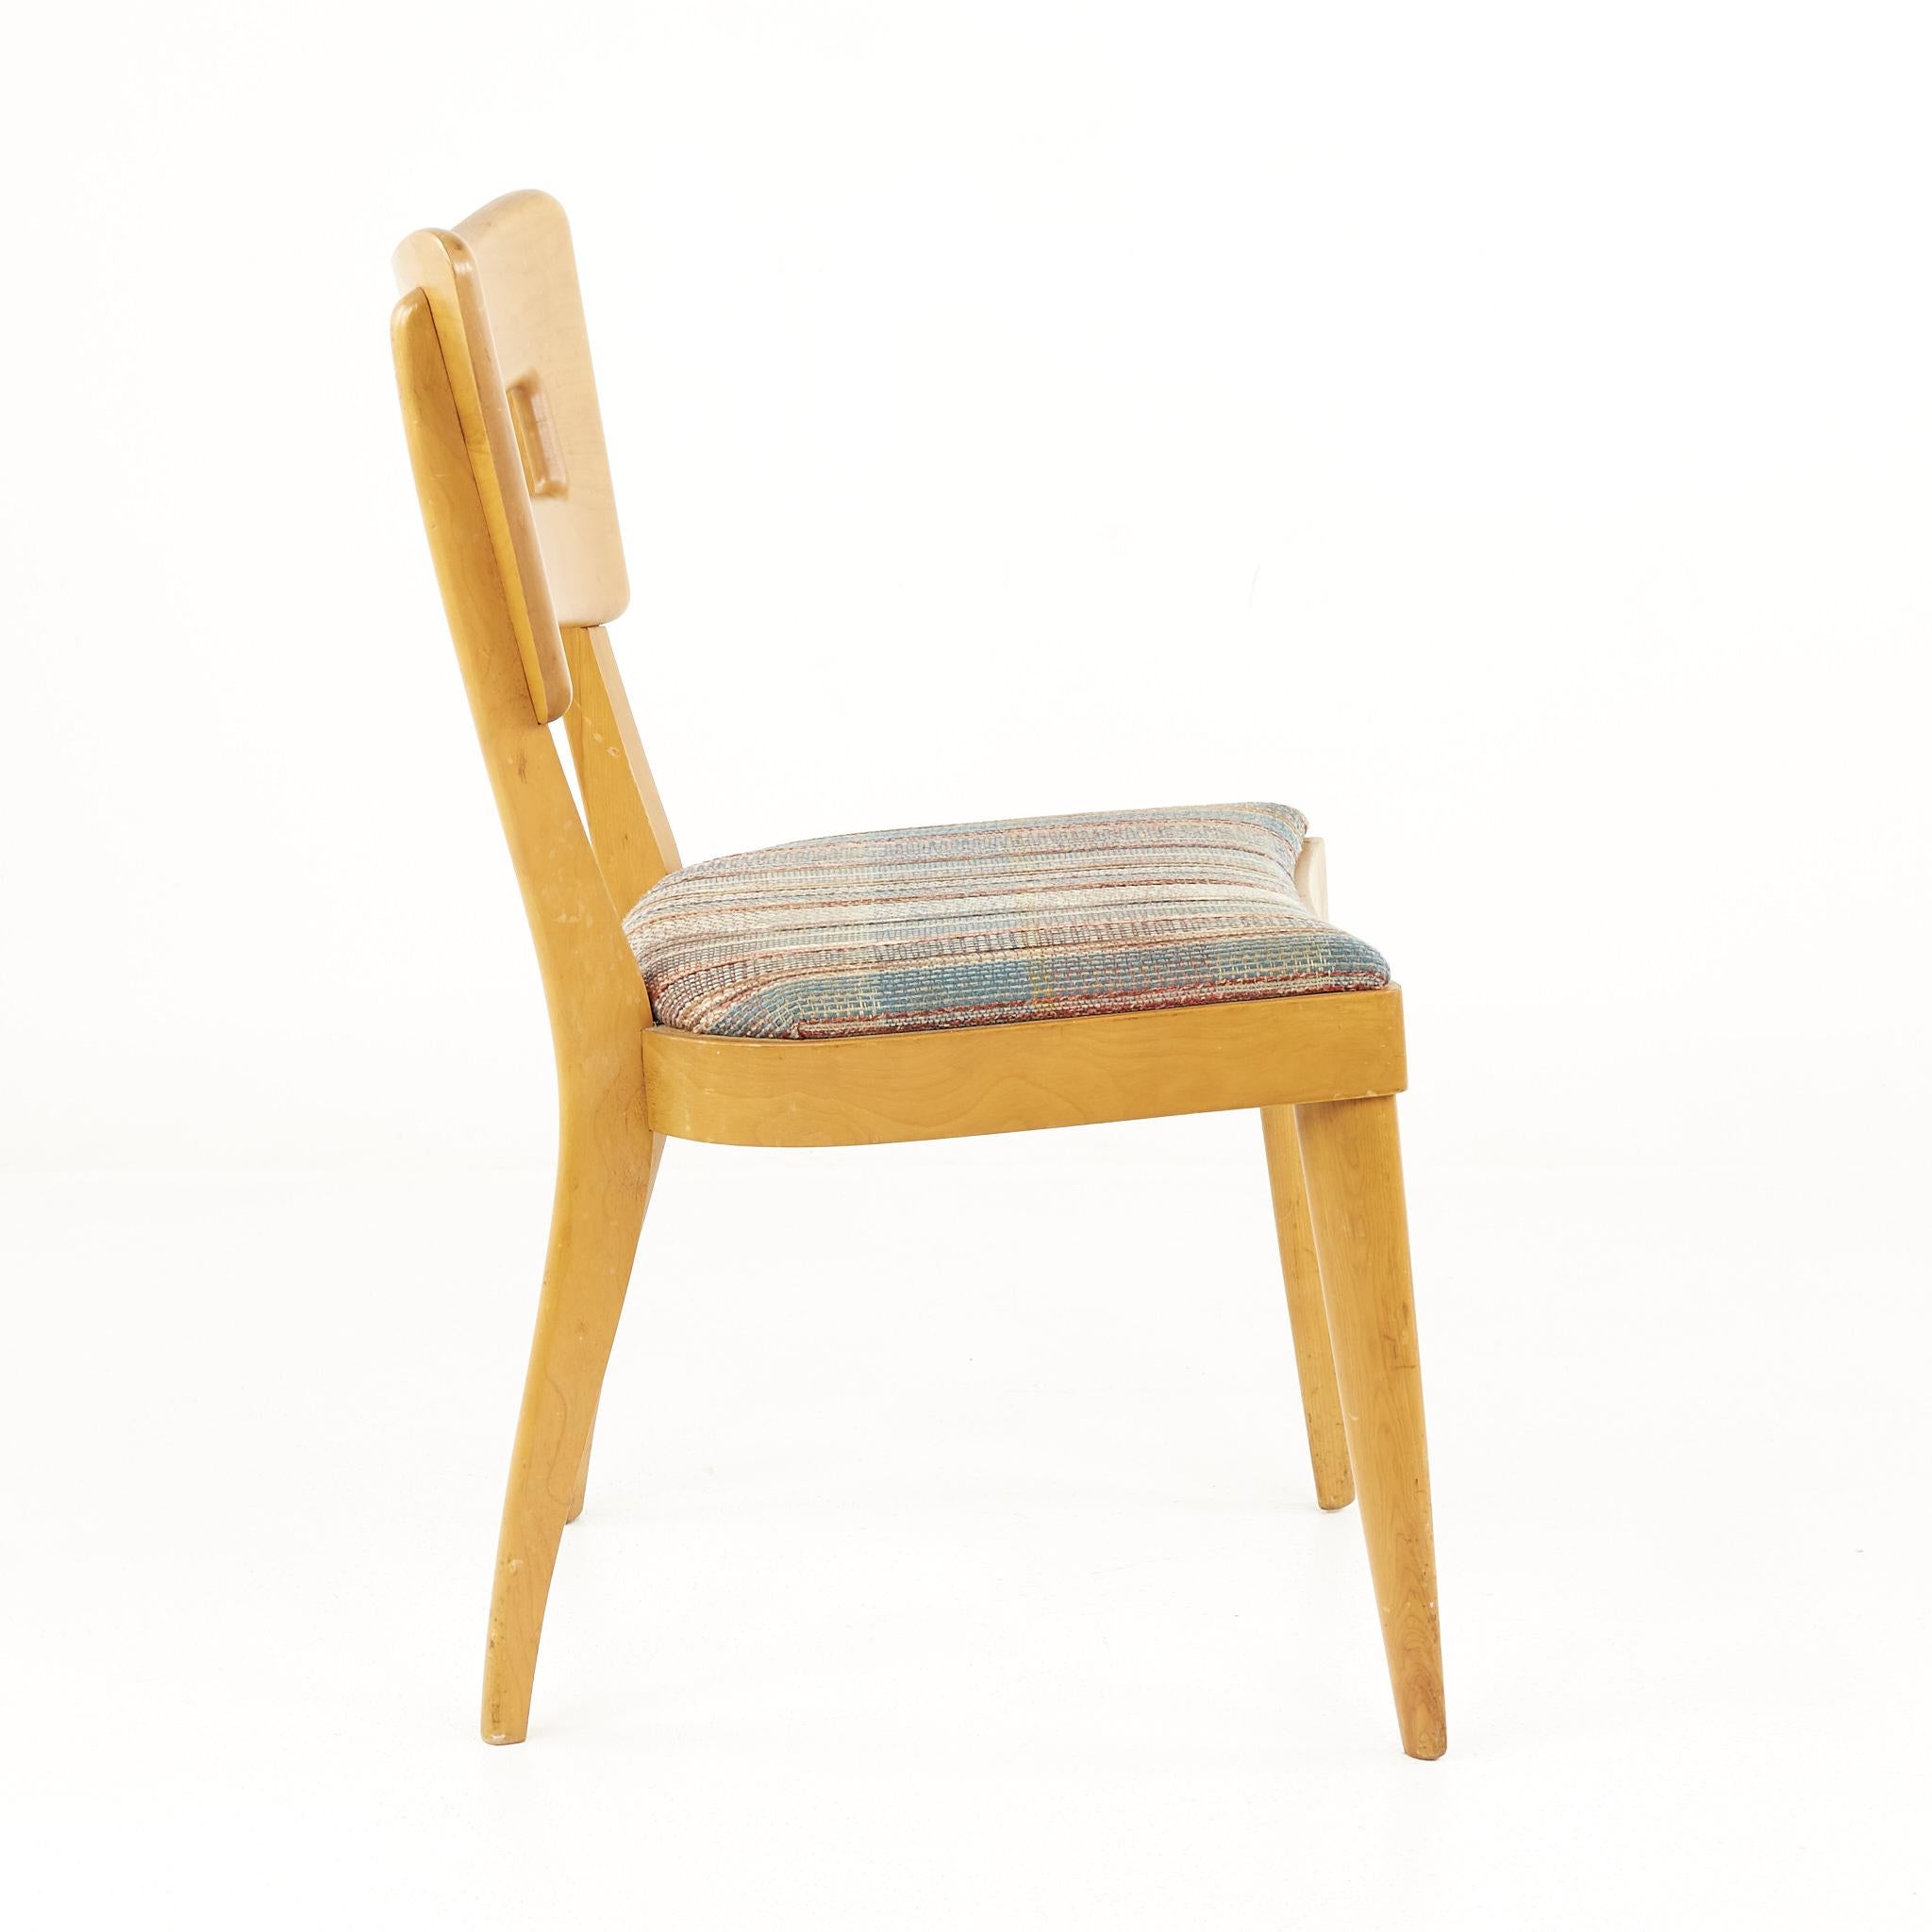 Upholstery Heywood Wakefield Mid Century Dog Bone Dining Chairs, Set of 4